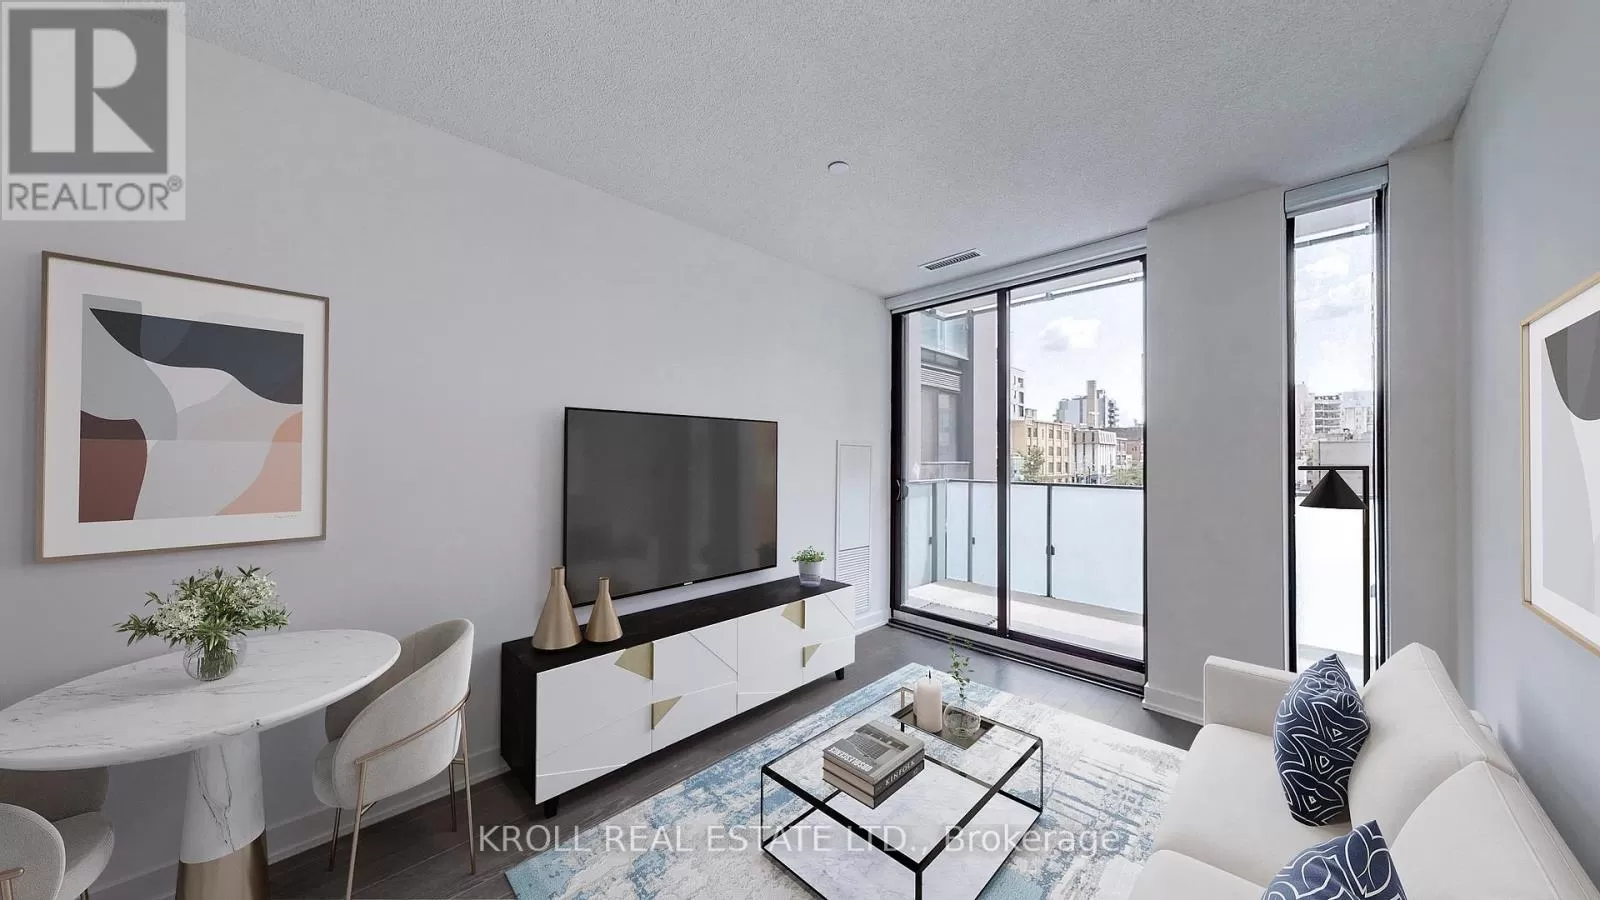 Apartment for rent: 201 - 25 Richmond Street E, Toronto, Ontario M5C 0A6